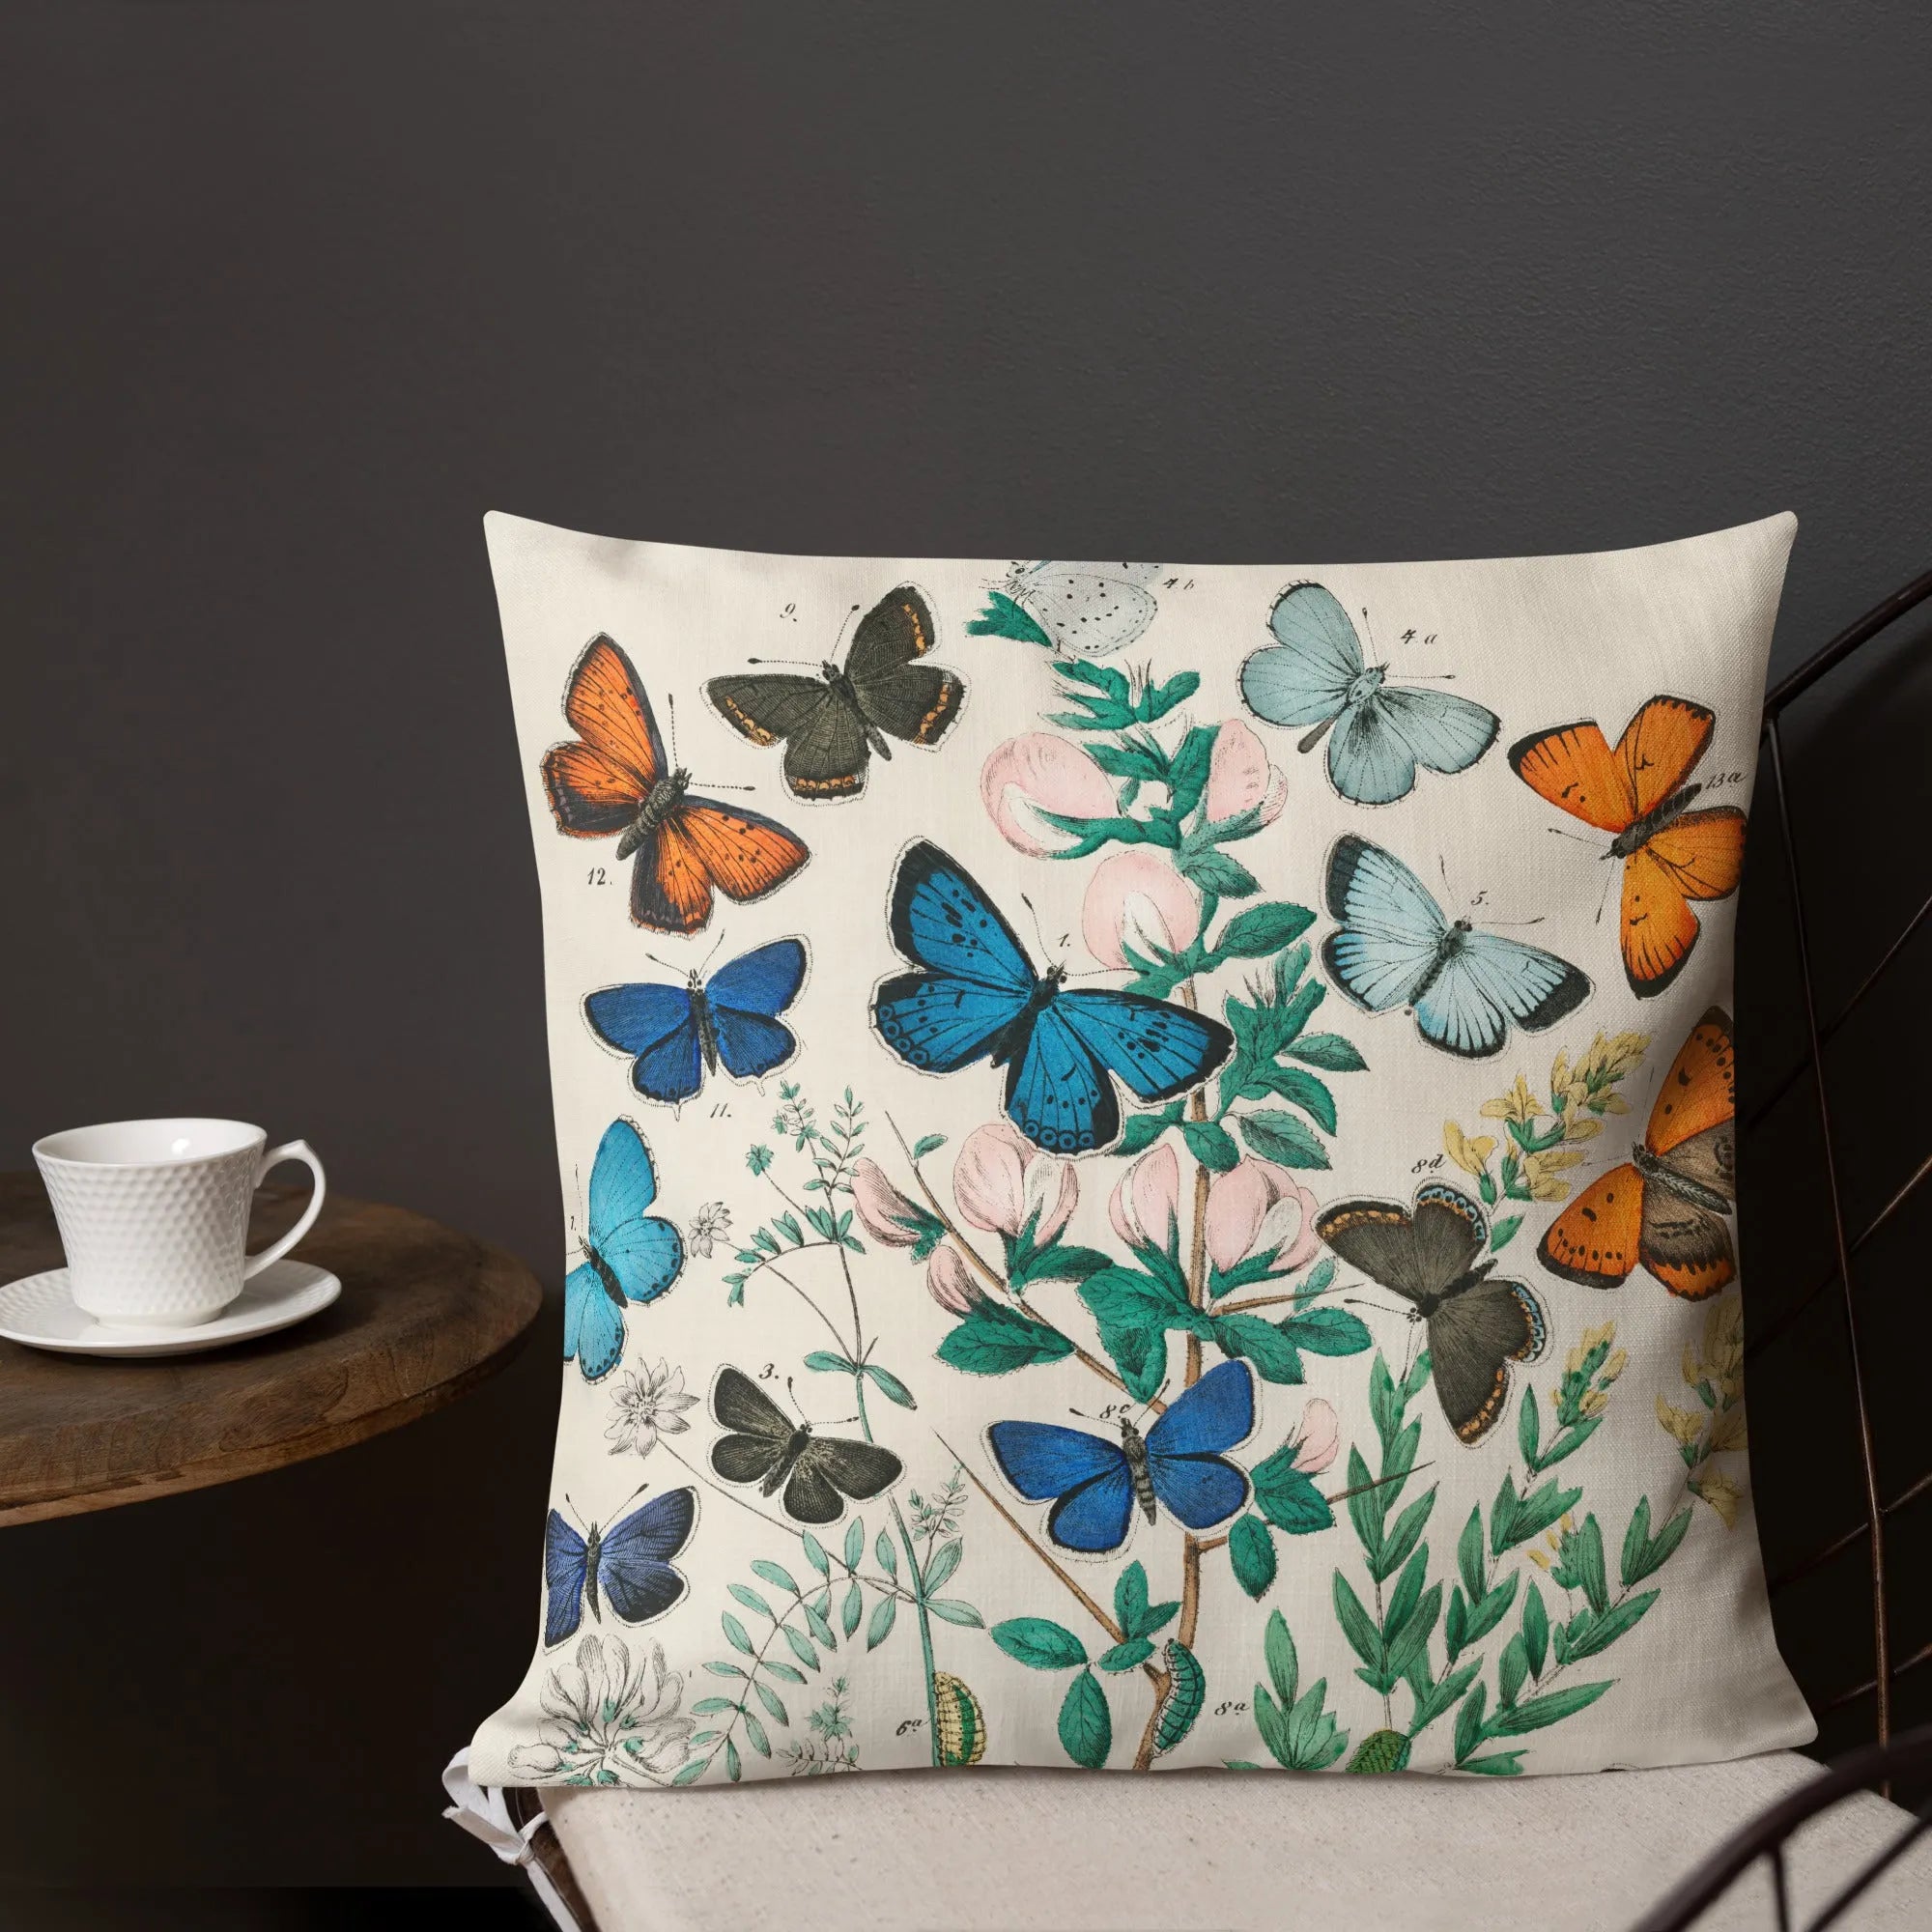 European Butterflies And Moths - William Forsell Kirby Cushion - Throw Pillows - Aesthetic Art